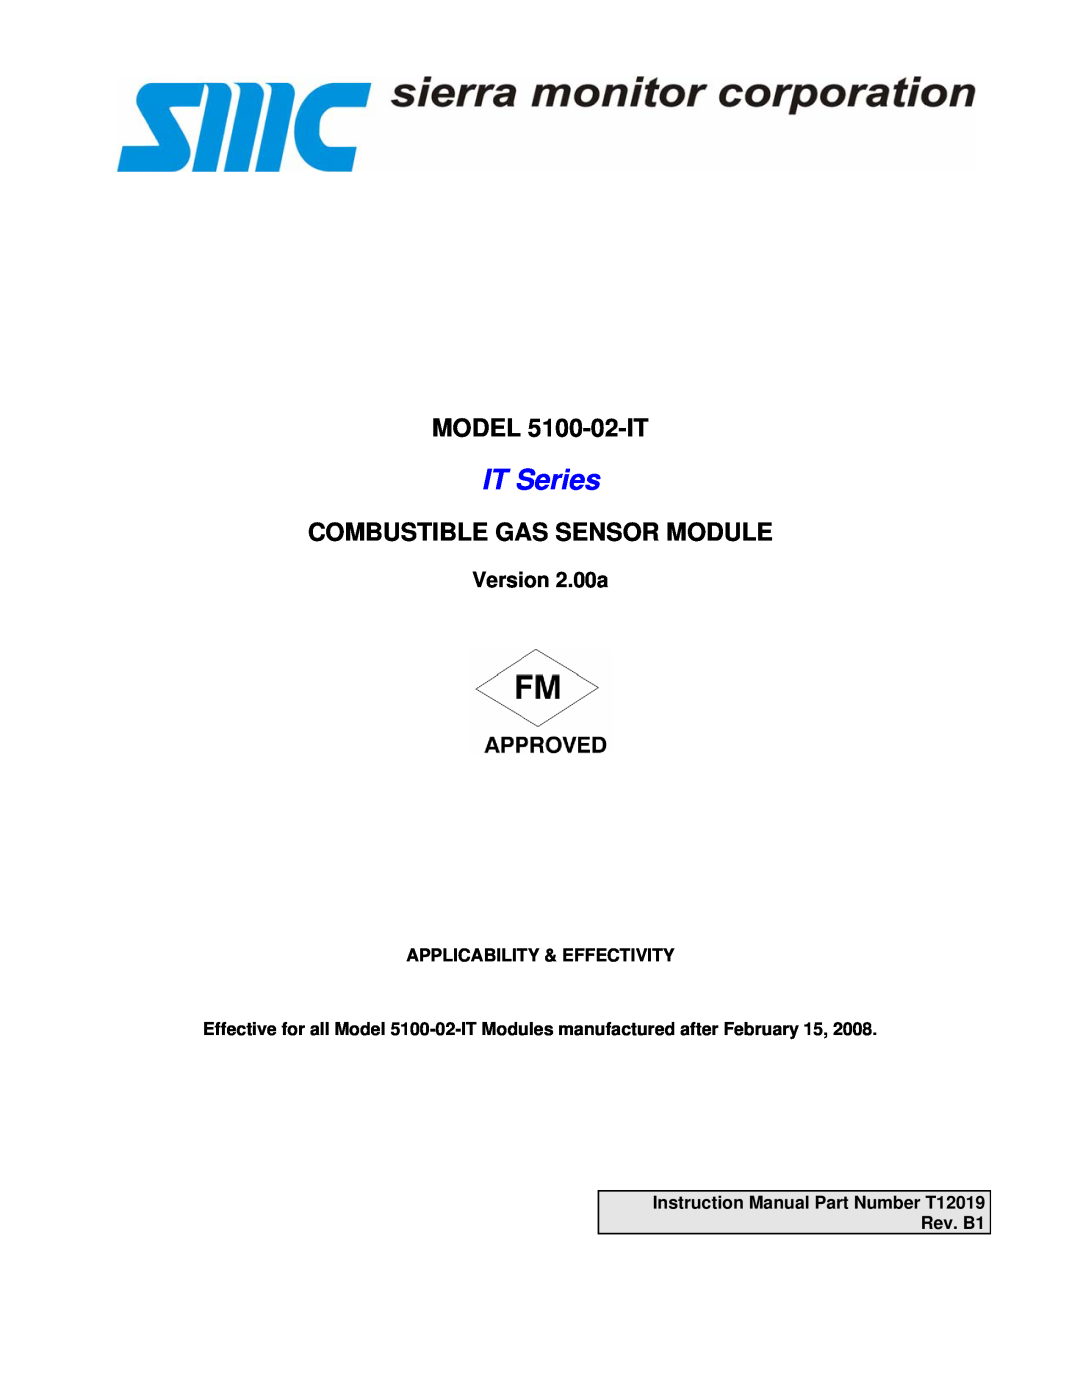 Univex instruction manual Version 2.00a, Applicability & Effectivity, IT Series, MODEL 5100-02-IT 